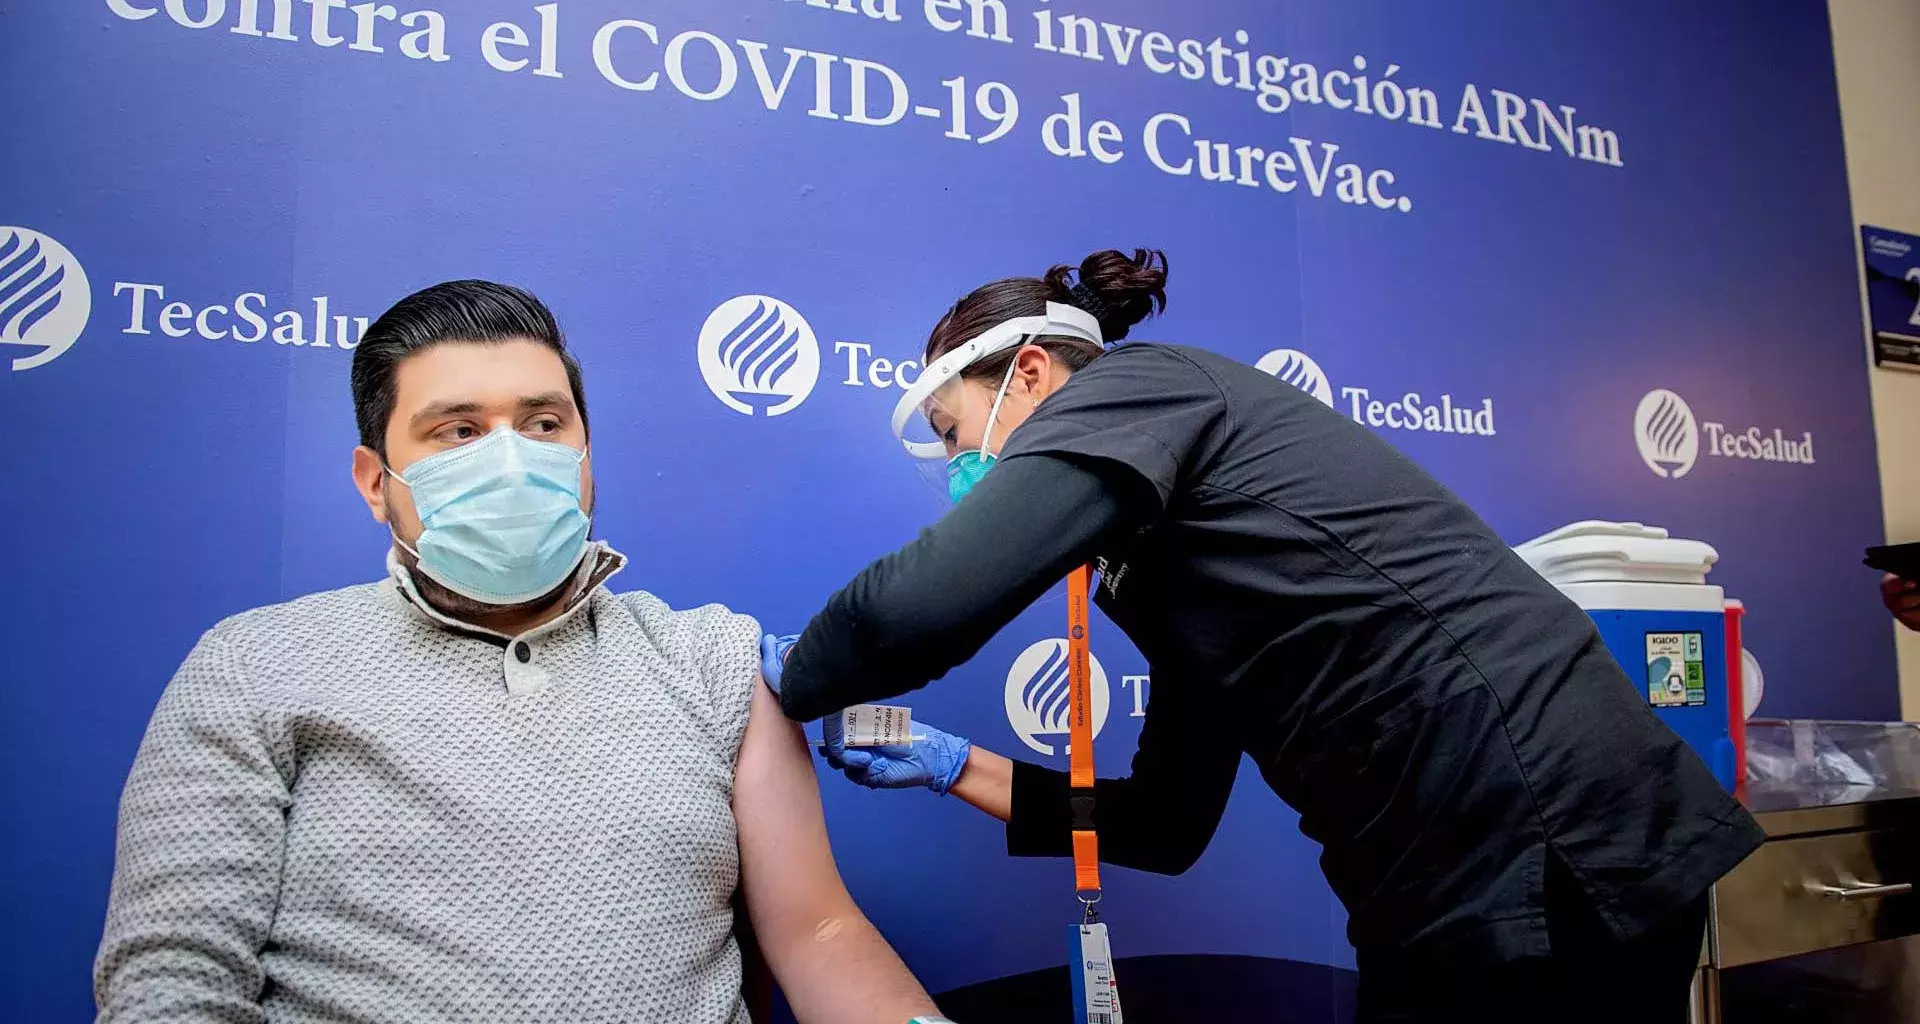 TecSalud begins Phase 3 trials of German CureVac vaccine in Mexico